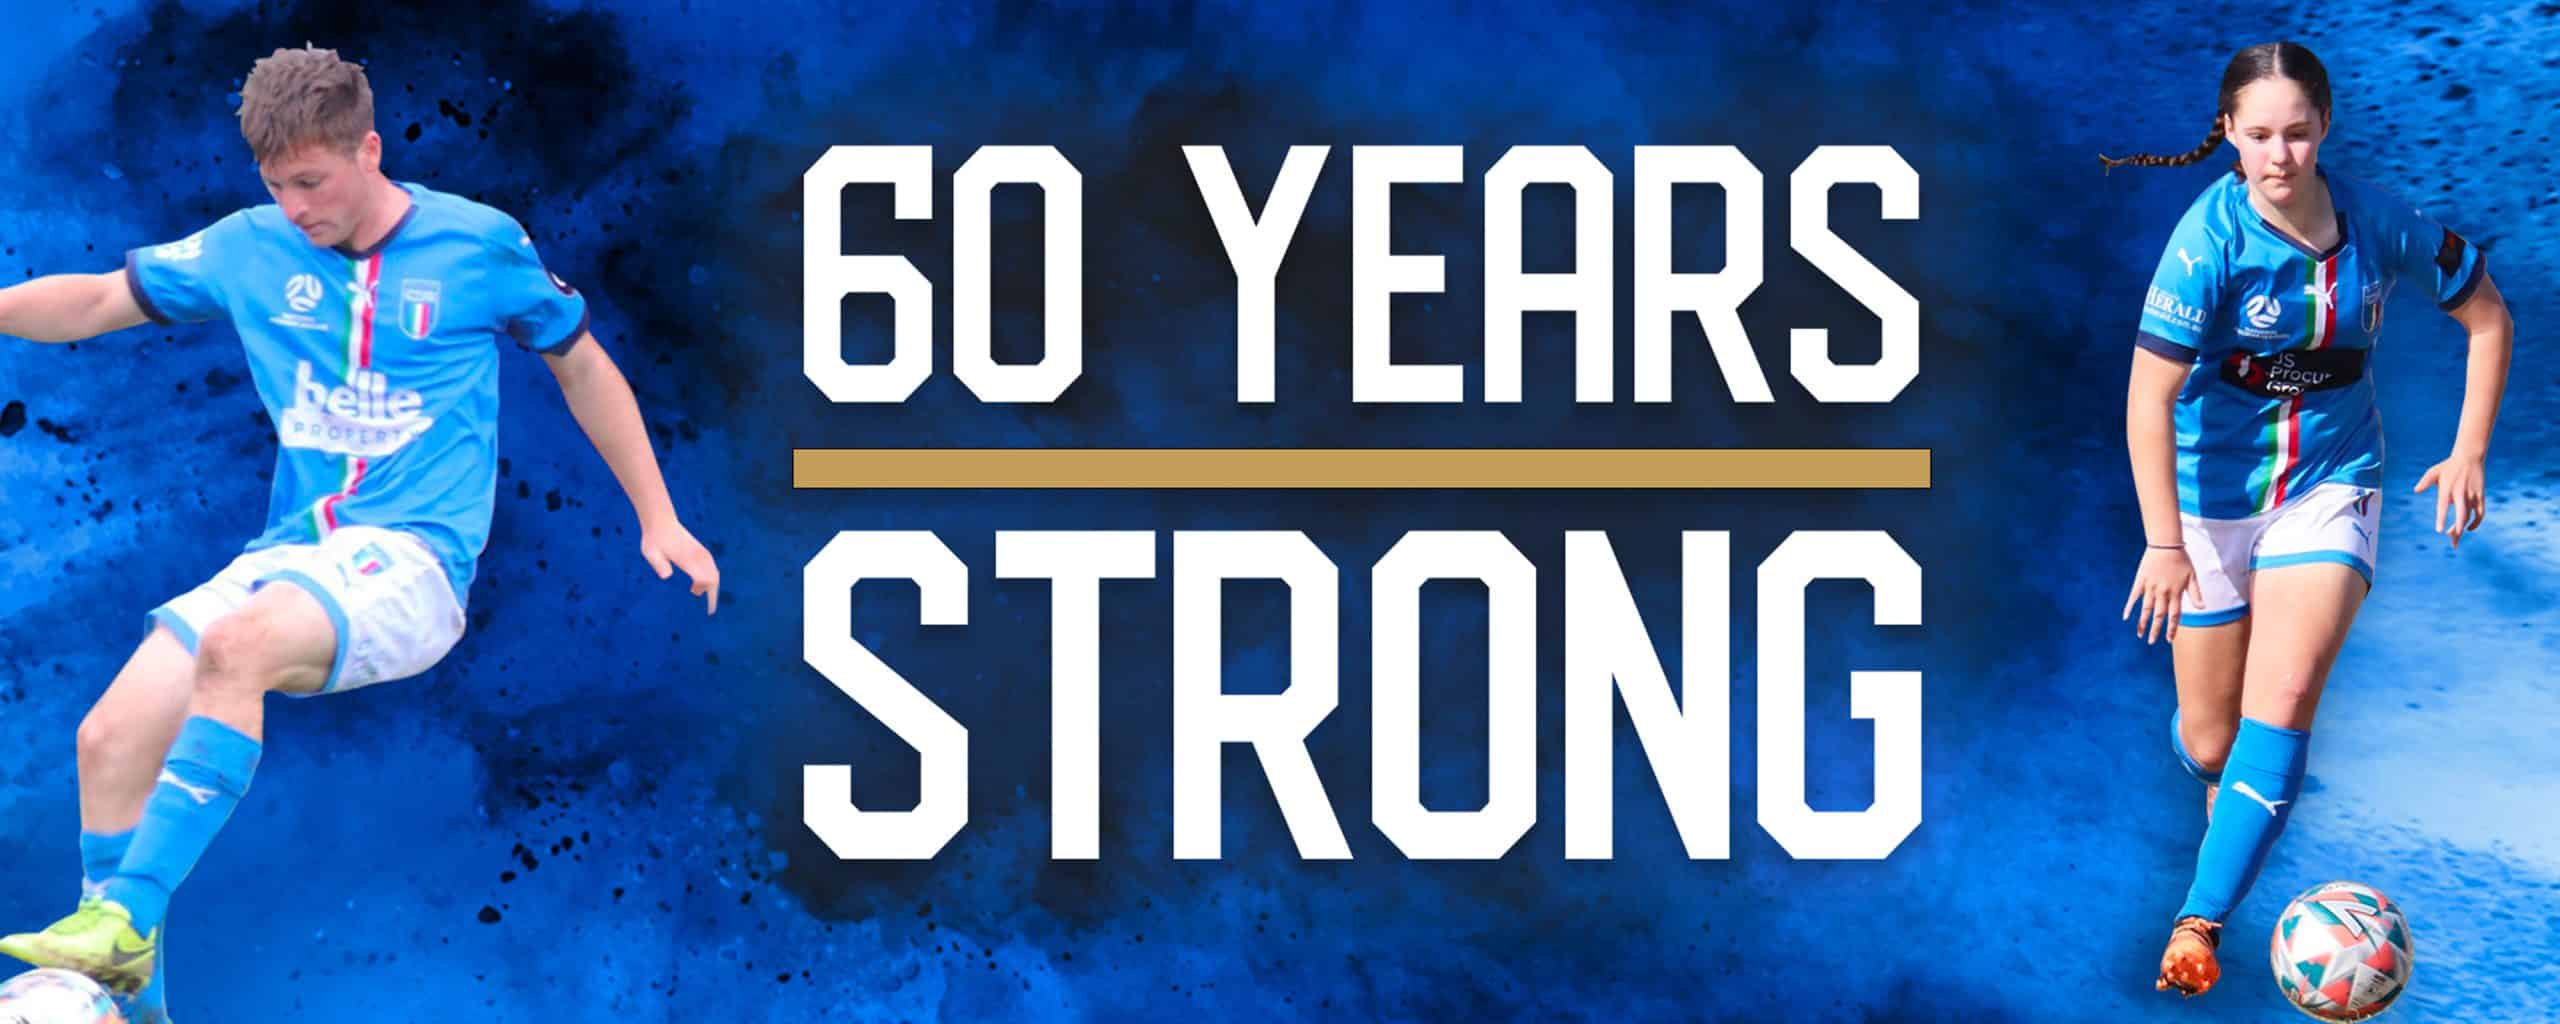 60 years of Azzurri